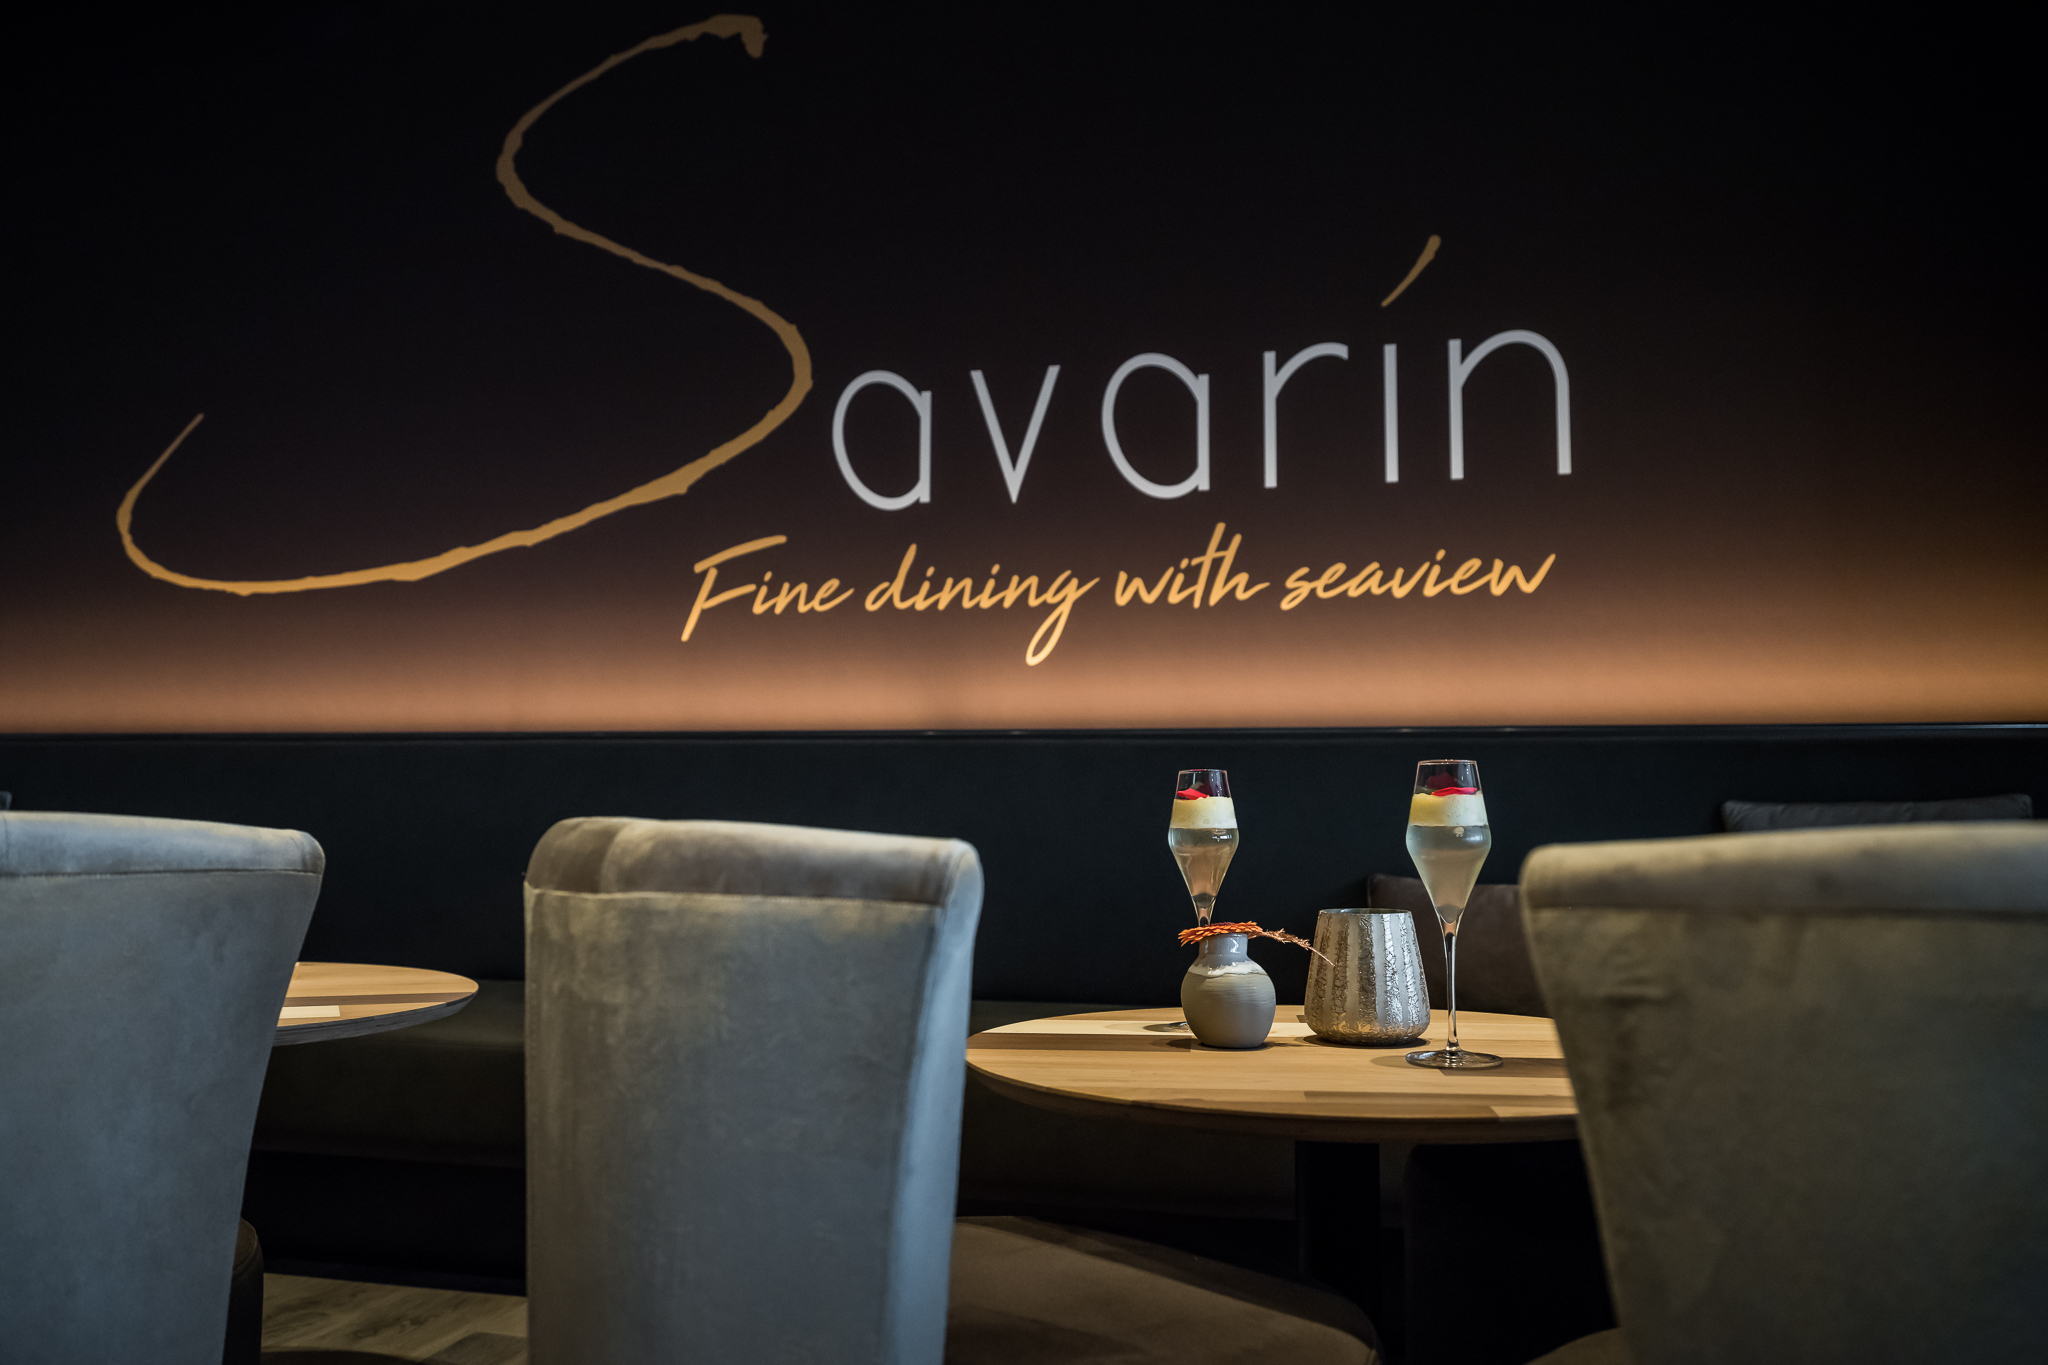 Savarin, klasse-brasserie in Oostende